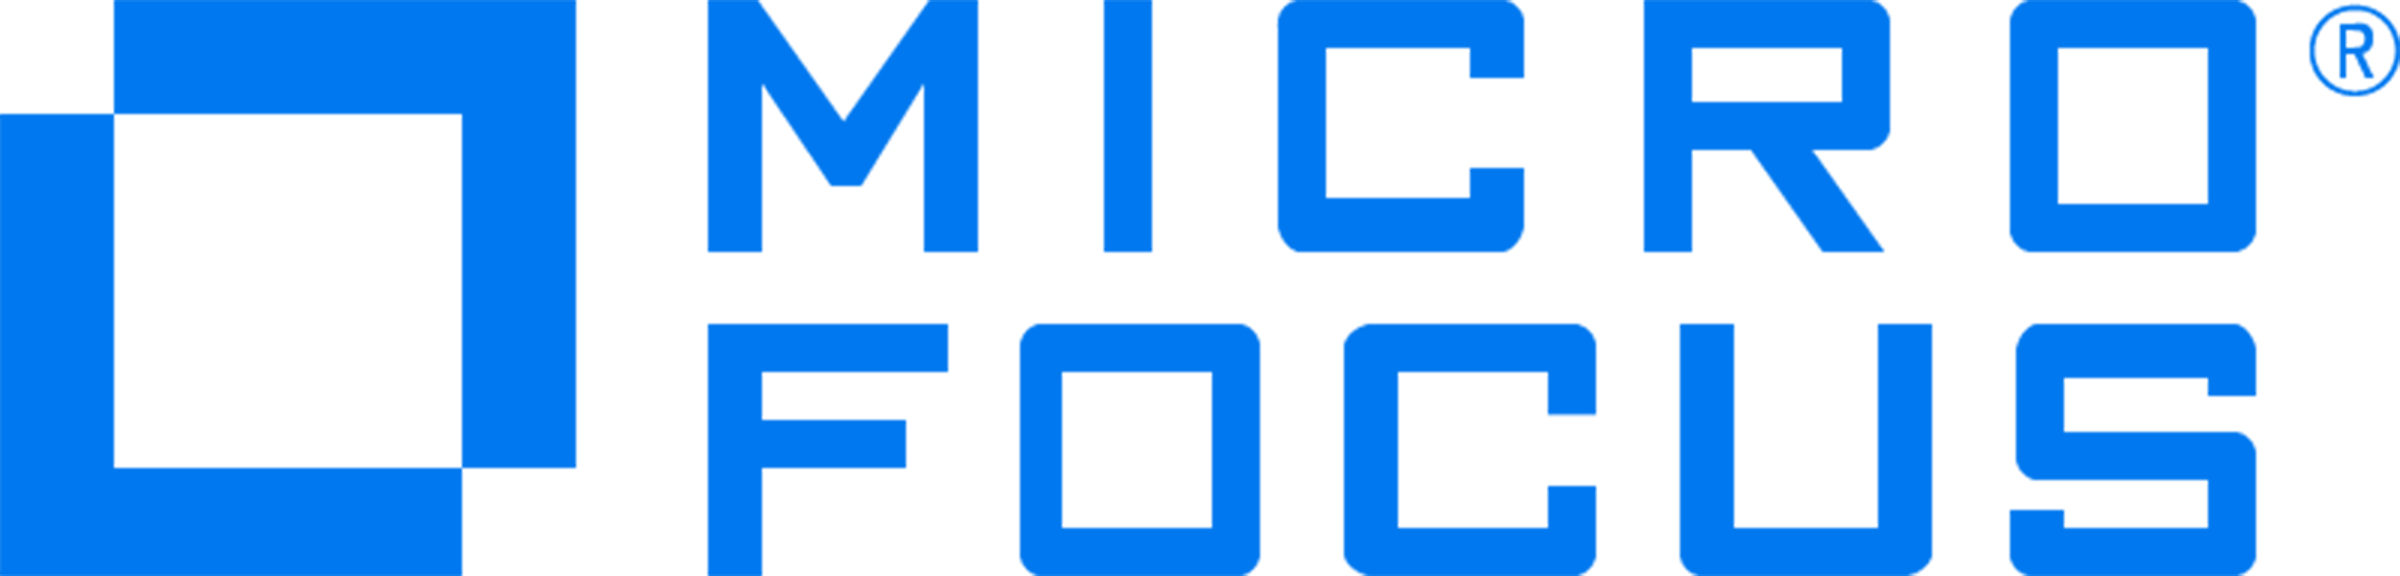 microfocus logo 2019